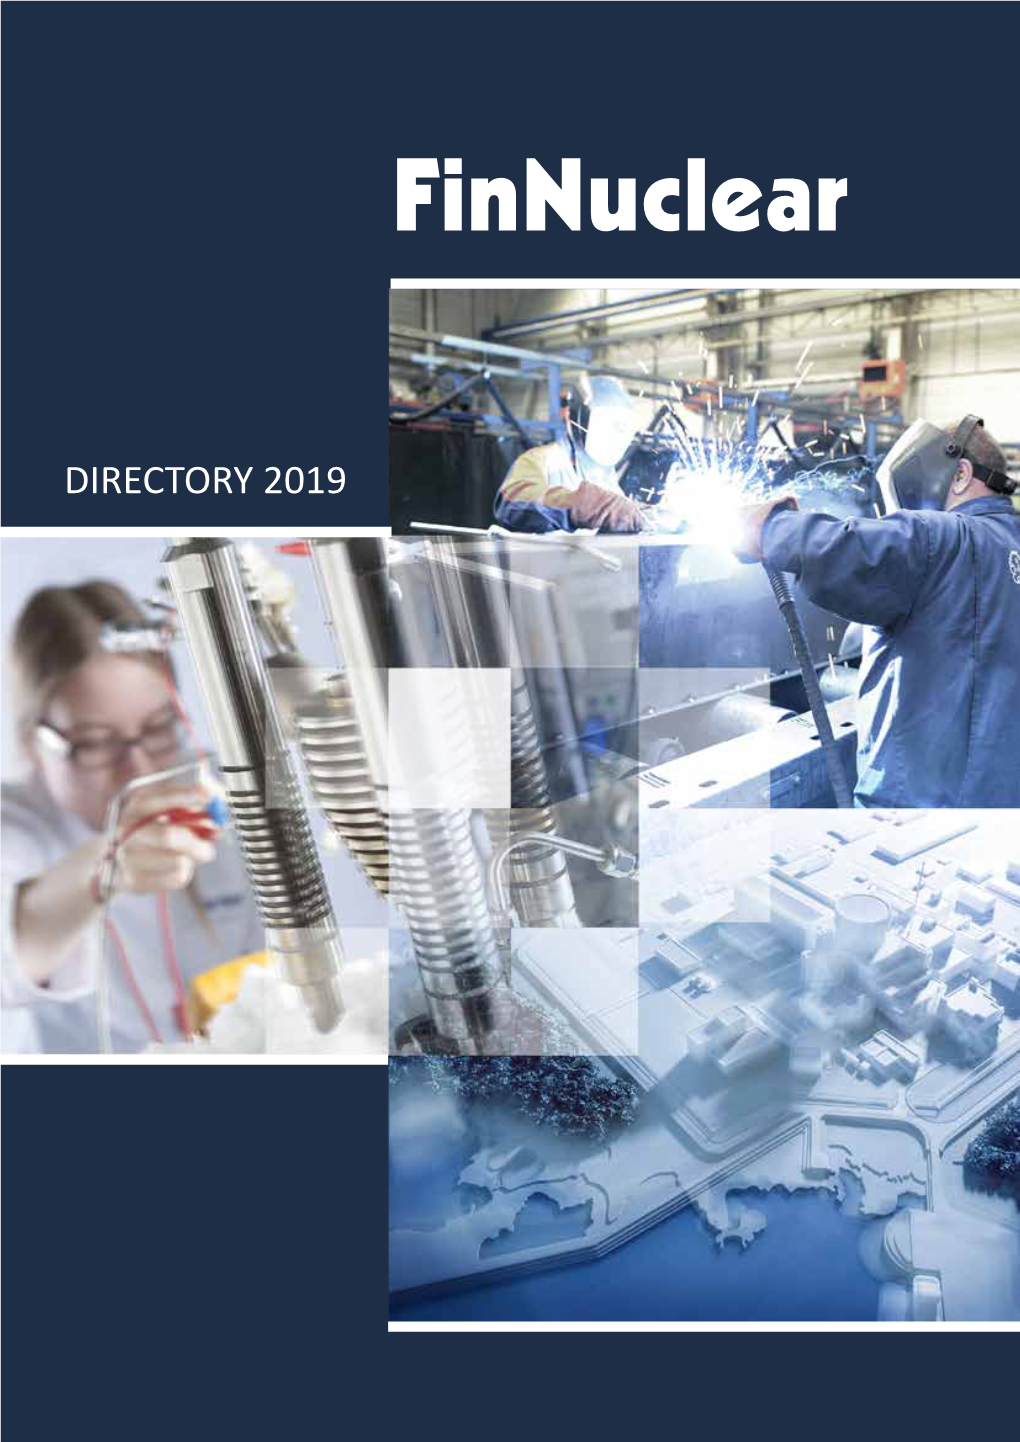 DIRECTORY 2019 Finnuclear